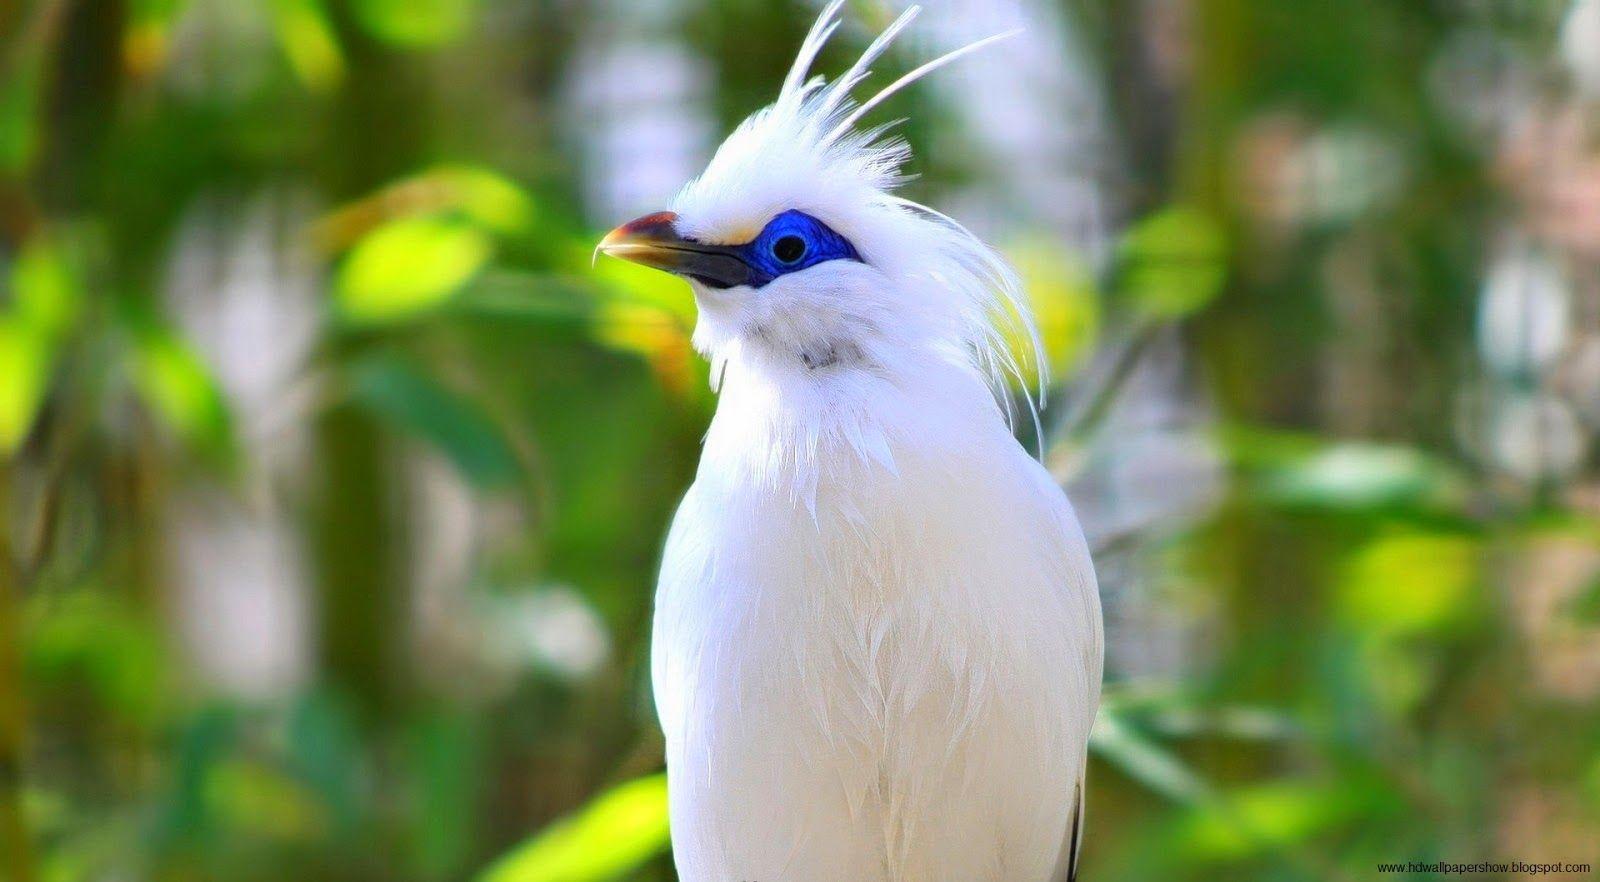 Blue White Bird Logo - HD Wallpapers : Beautiful White Bird With Blue Eyes